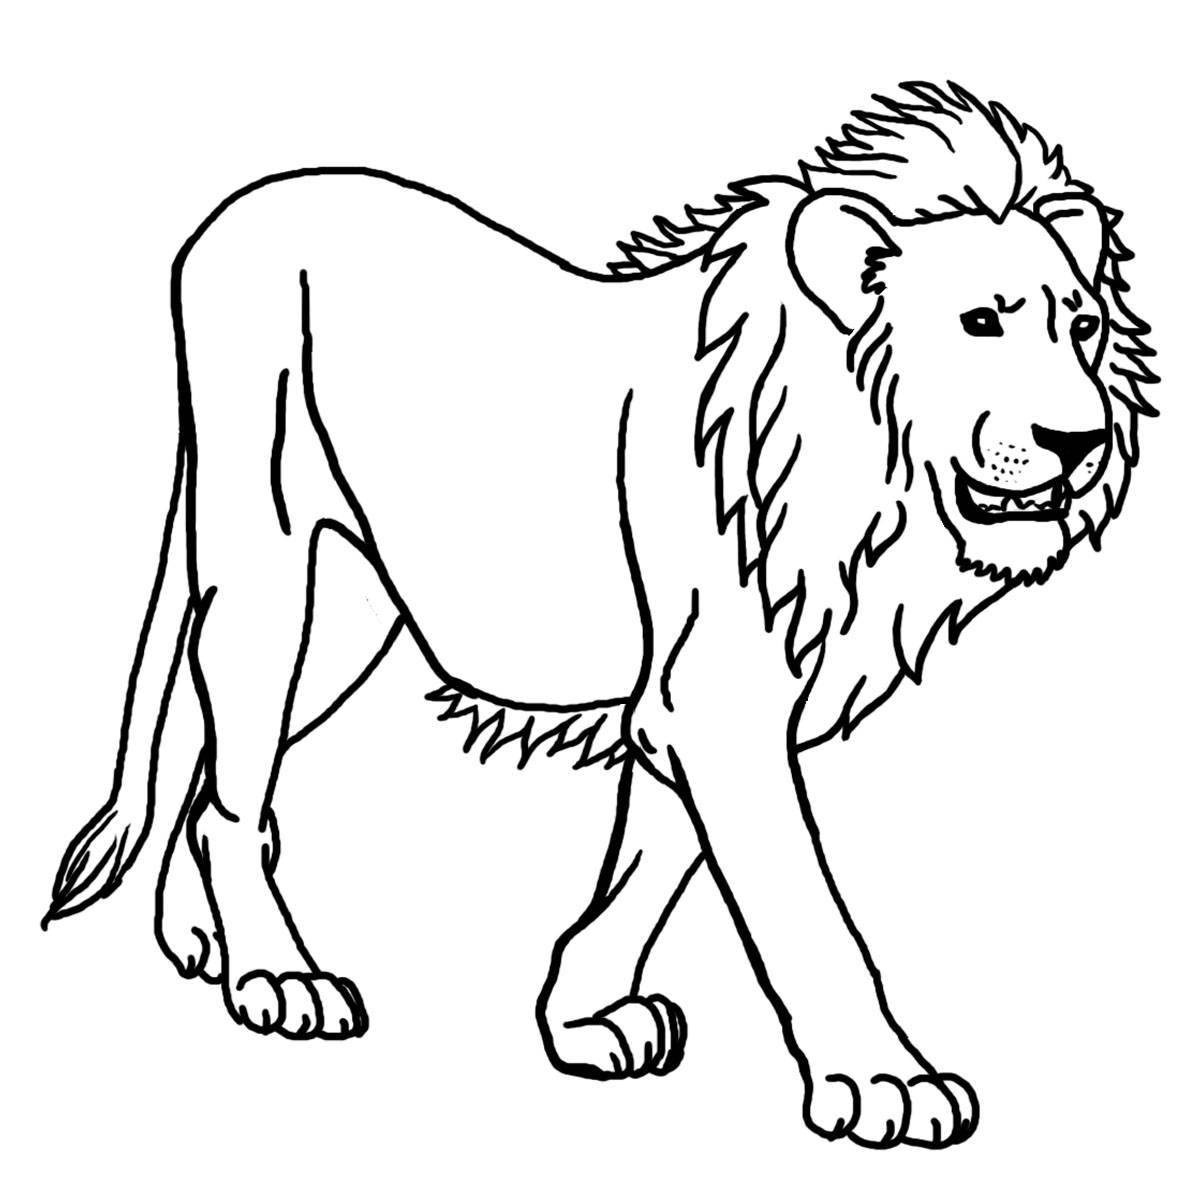 Joyful lion coloring book for kids